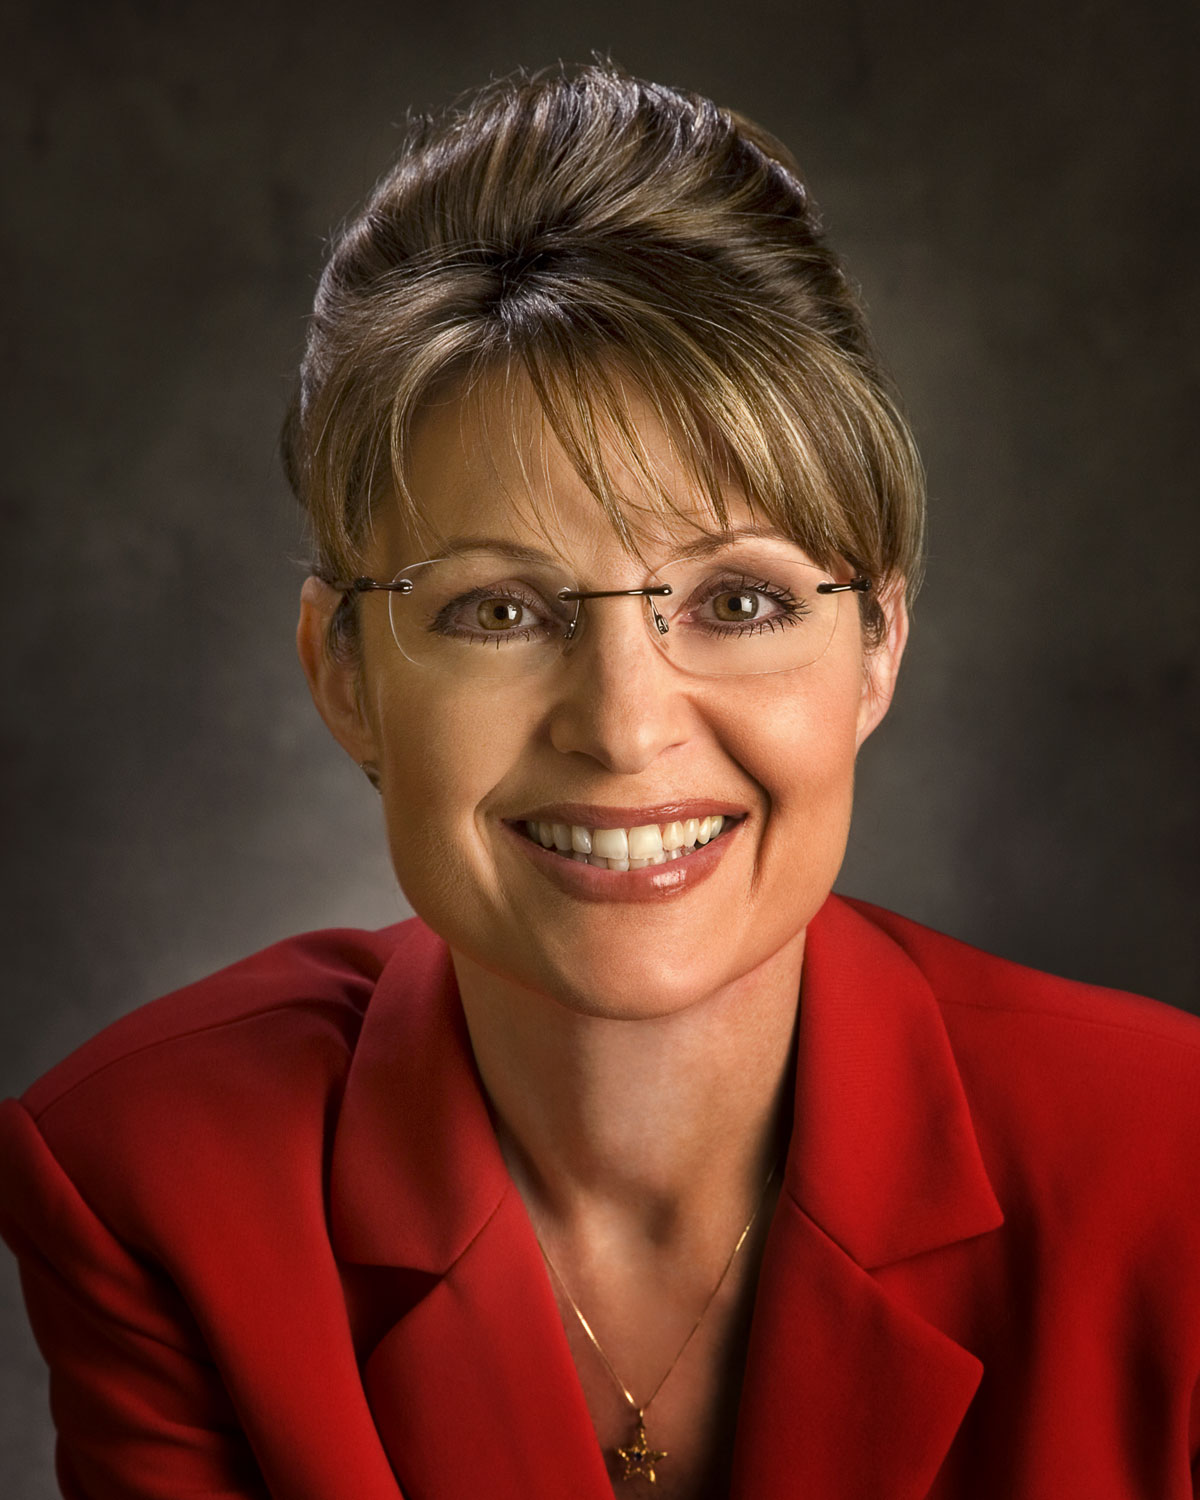 Sarah Palin leaked wallpapers